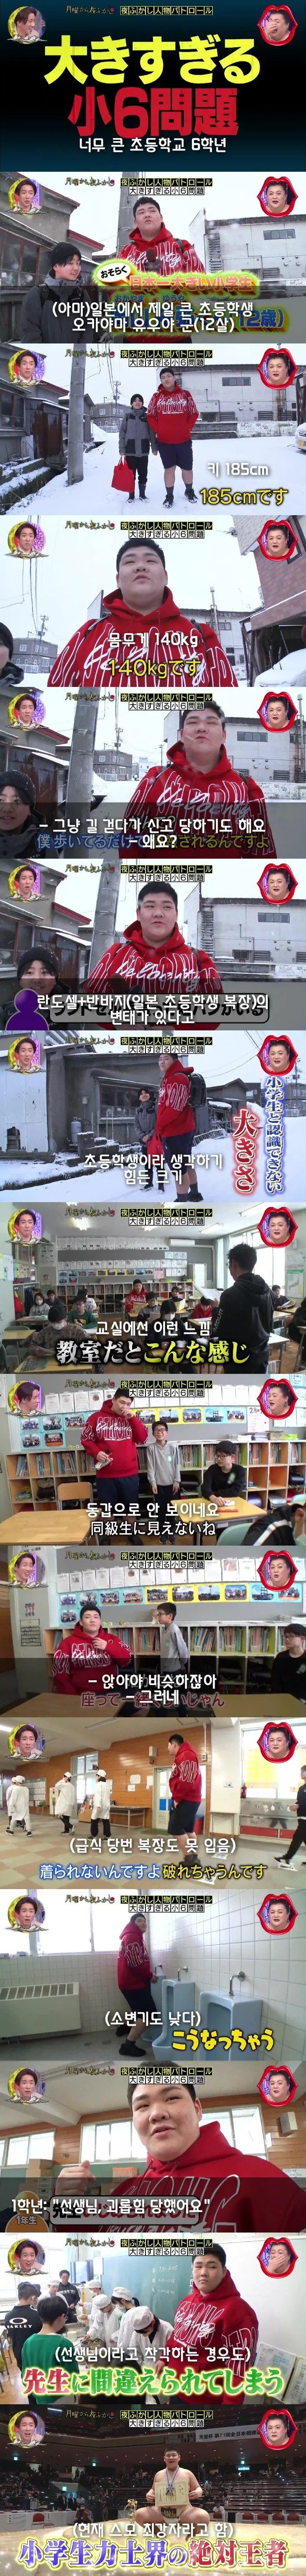 nokbeon.net-일본의 너무 큰 초등학교 6학년.jpg-1번 이미지